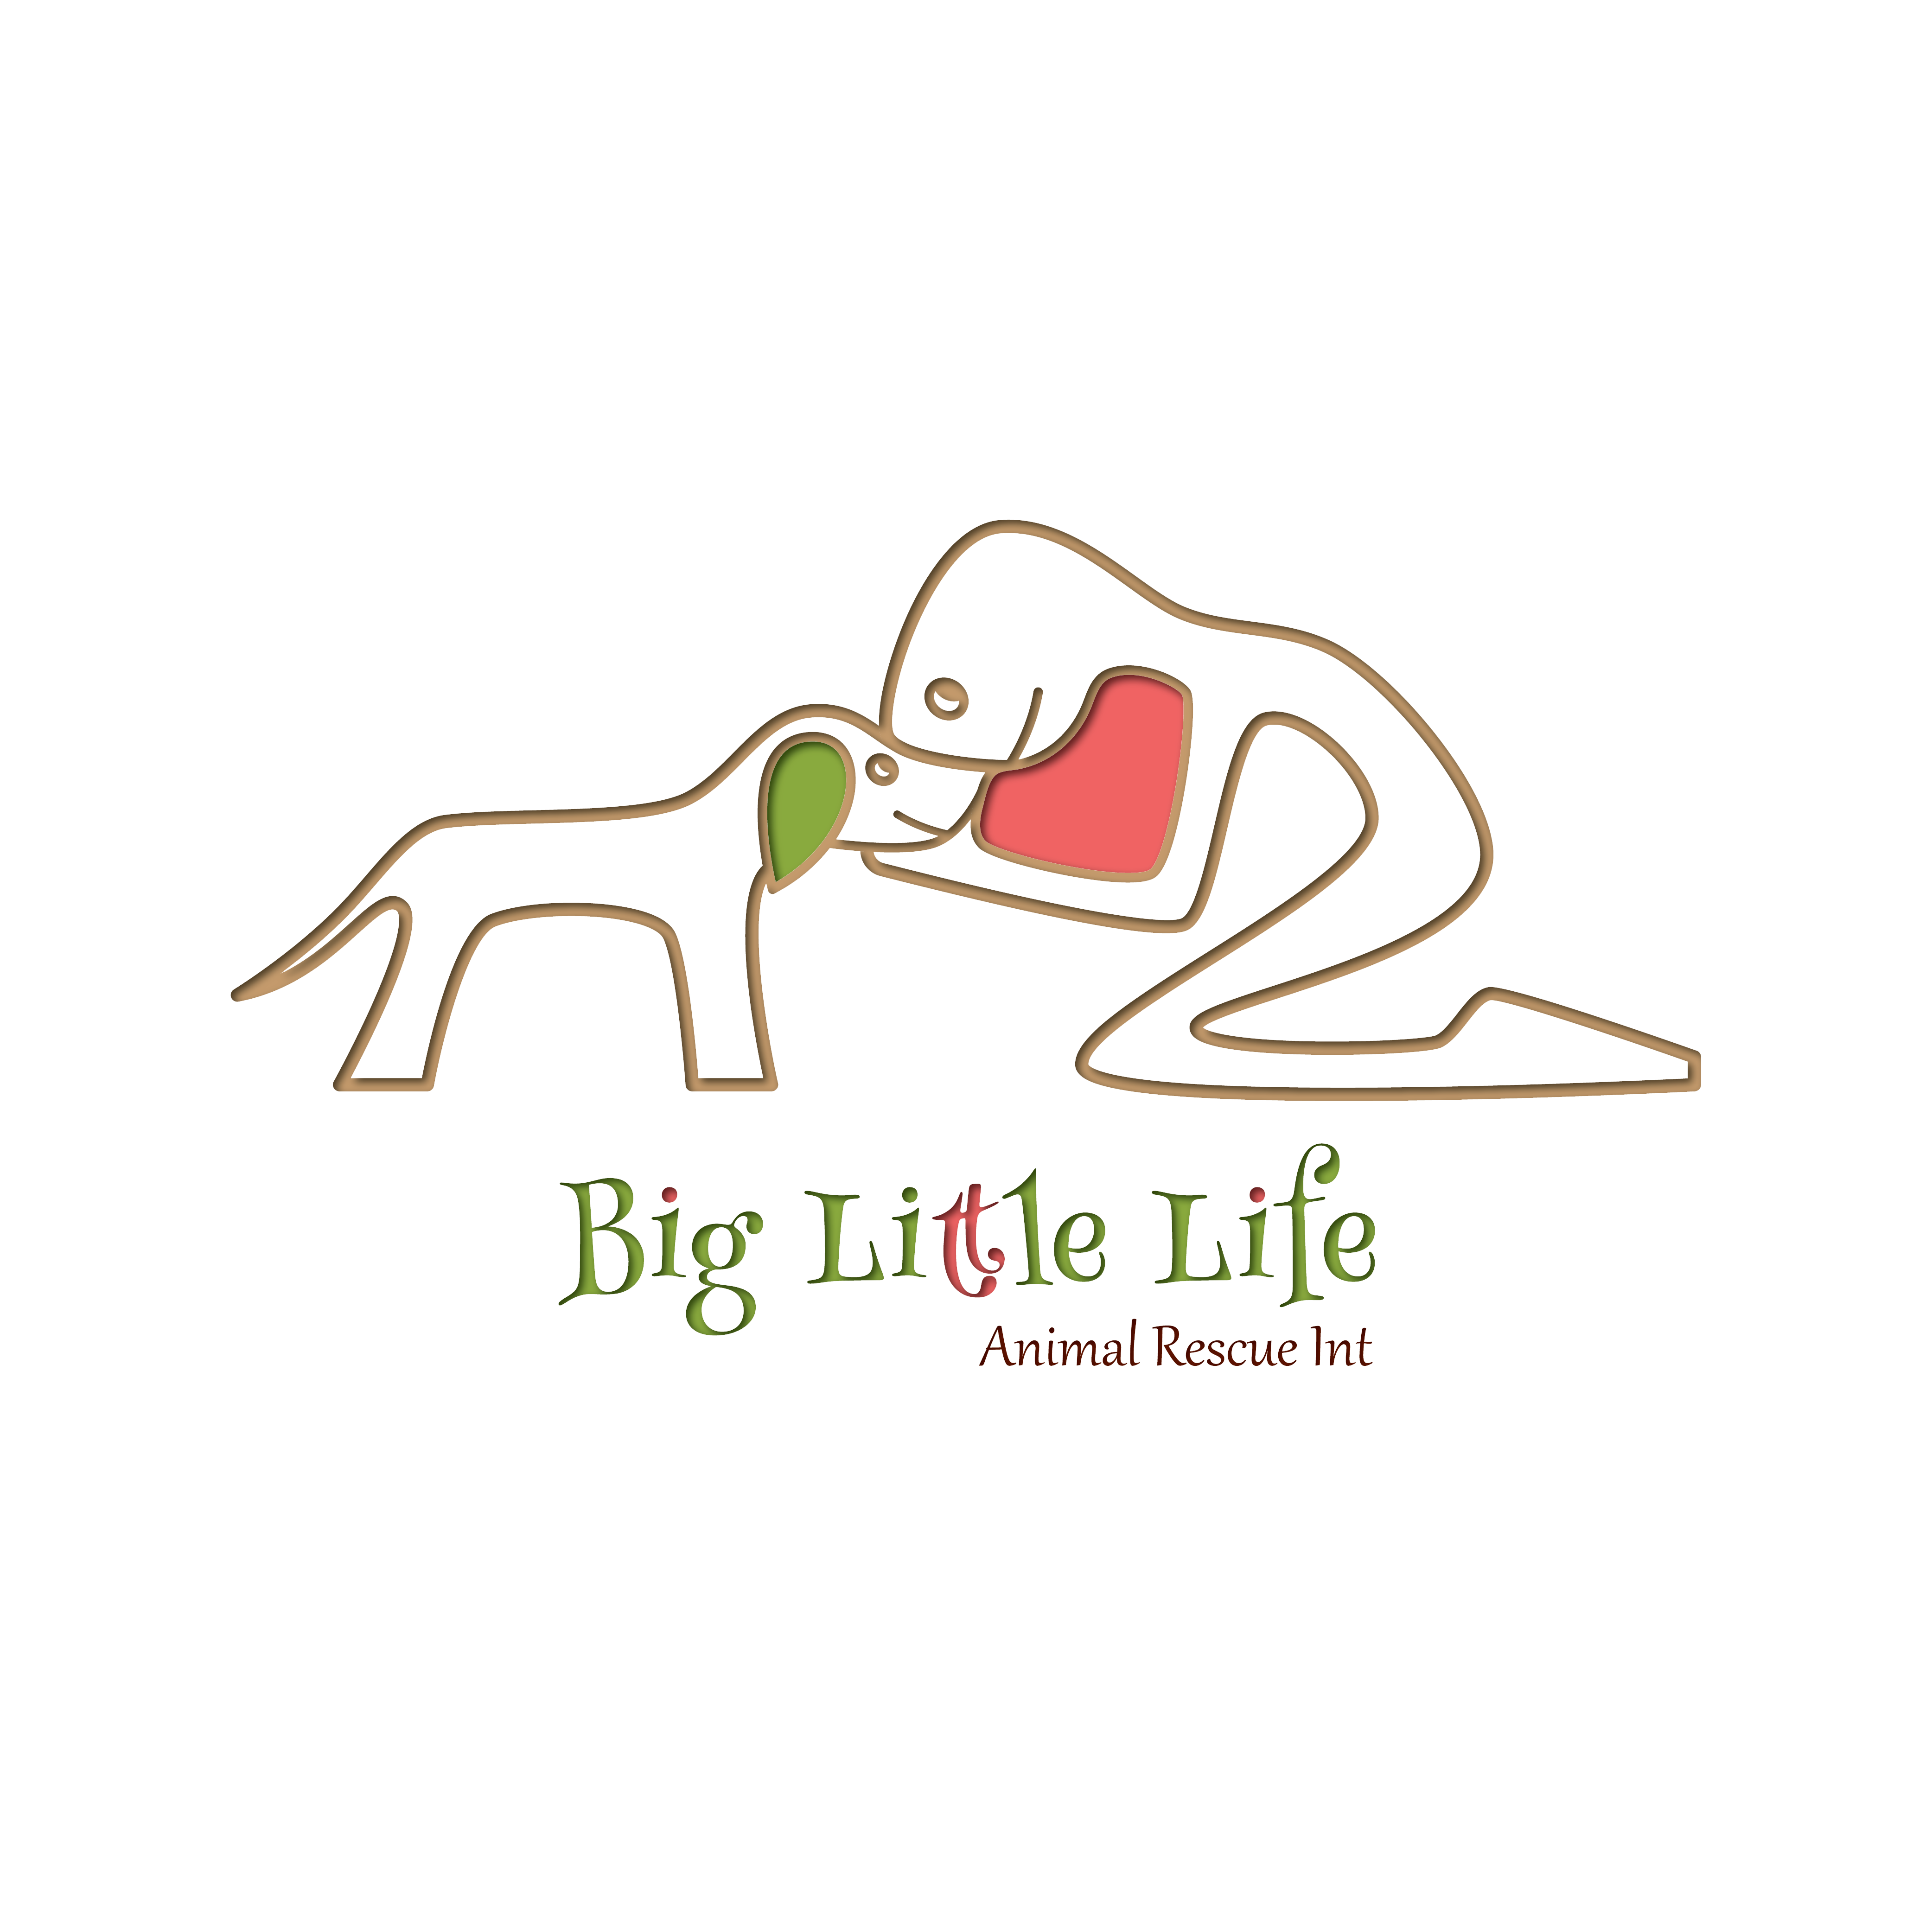 Big Little Life Animal Rescue International logo